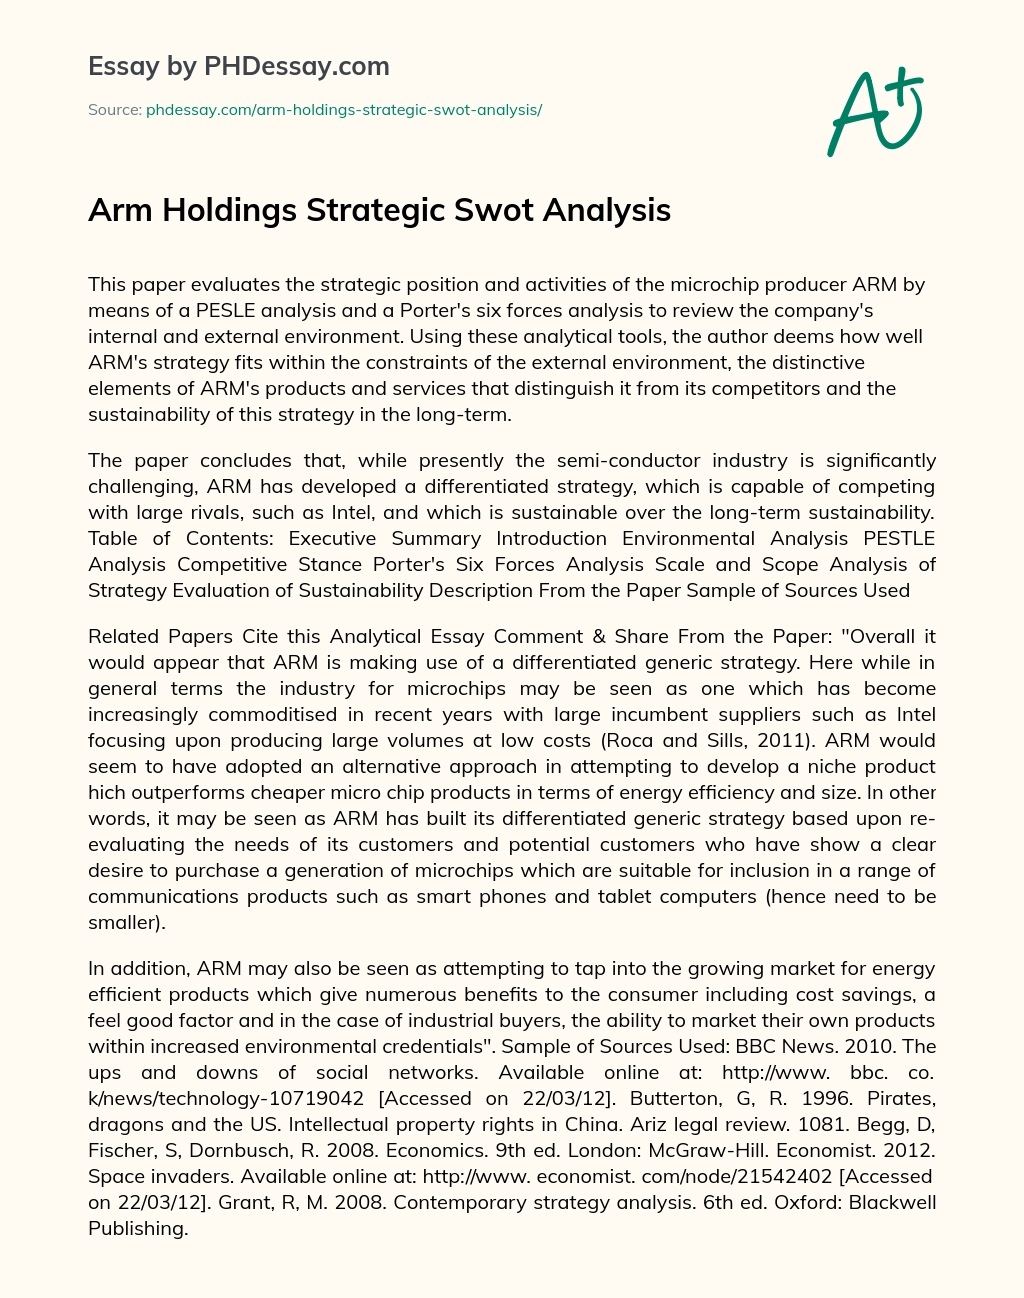 Arm Holdings Strategic Swot Analysis essay